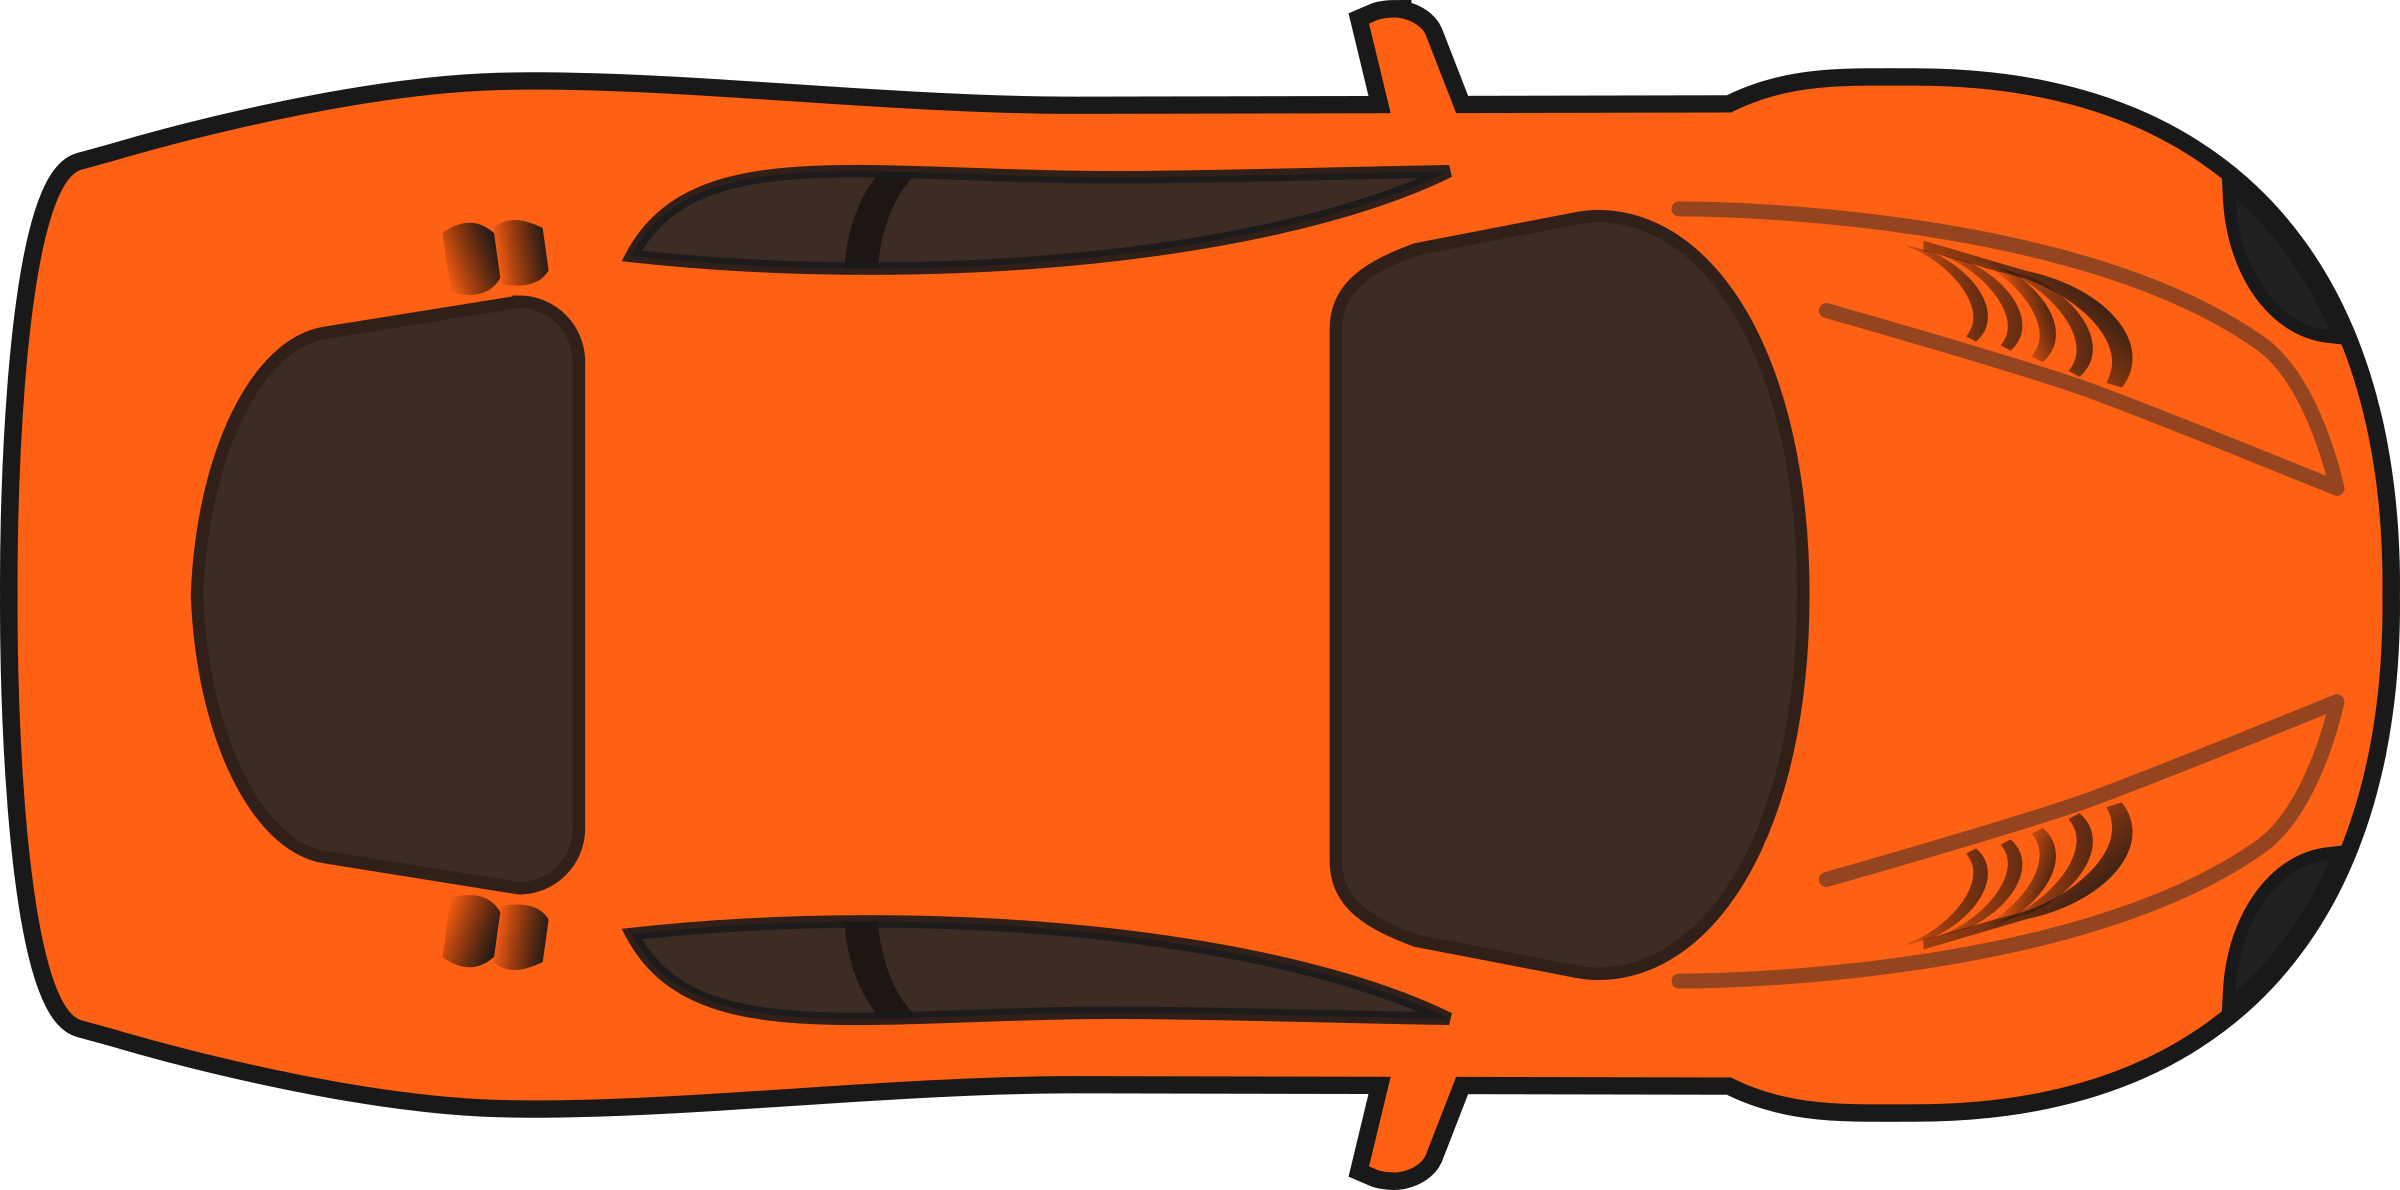 An Orange Car With Black Trim